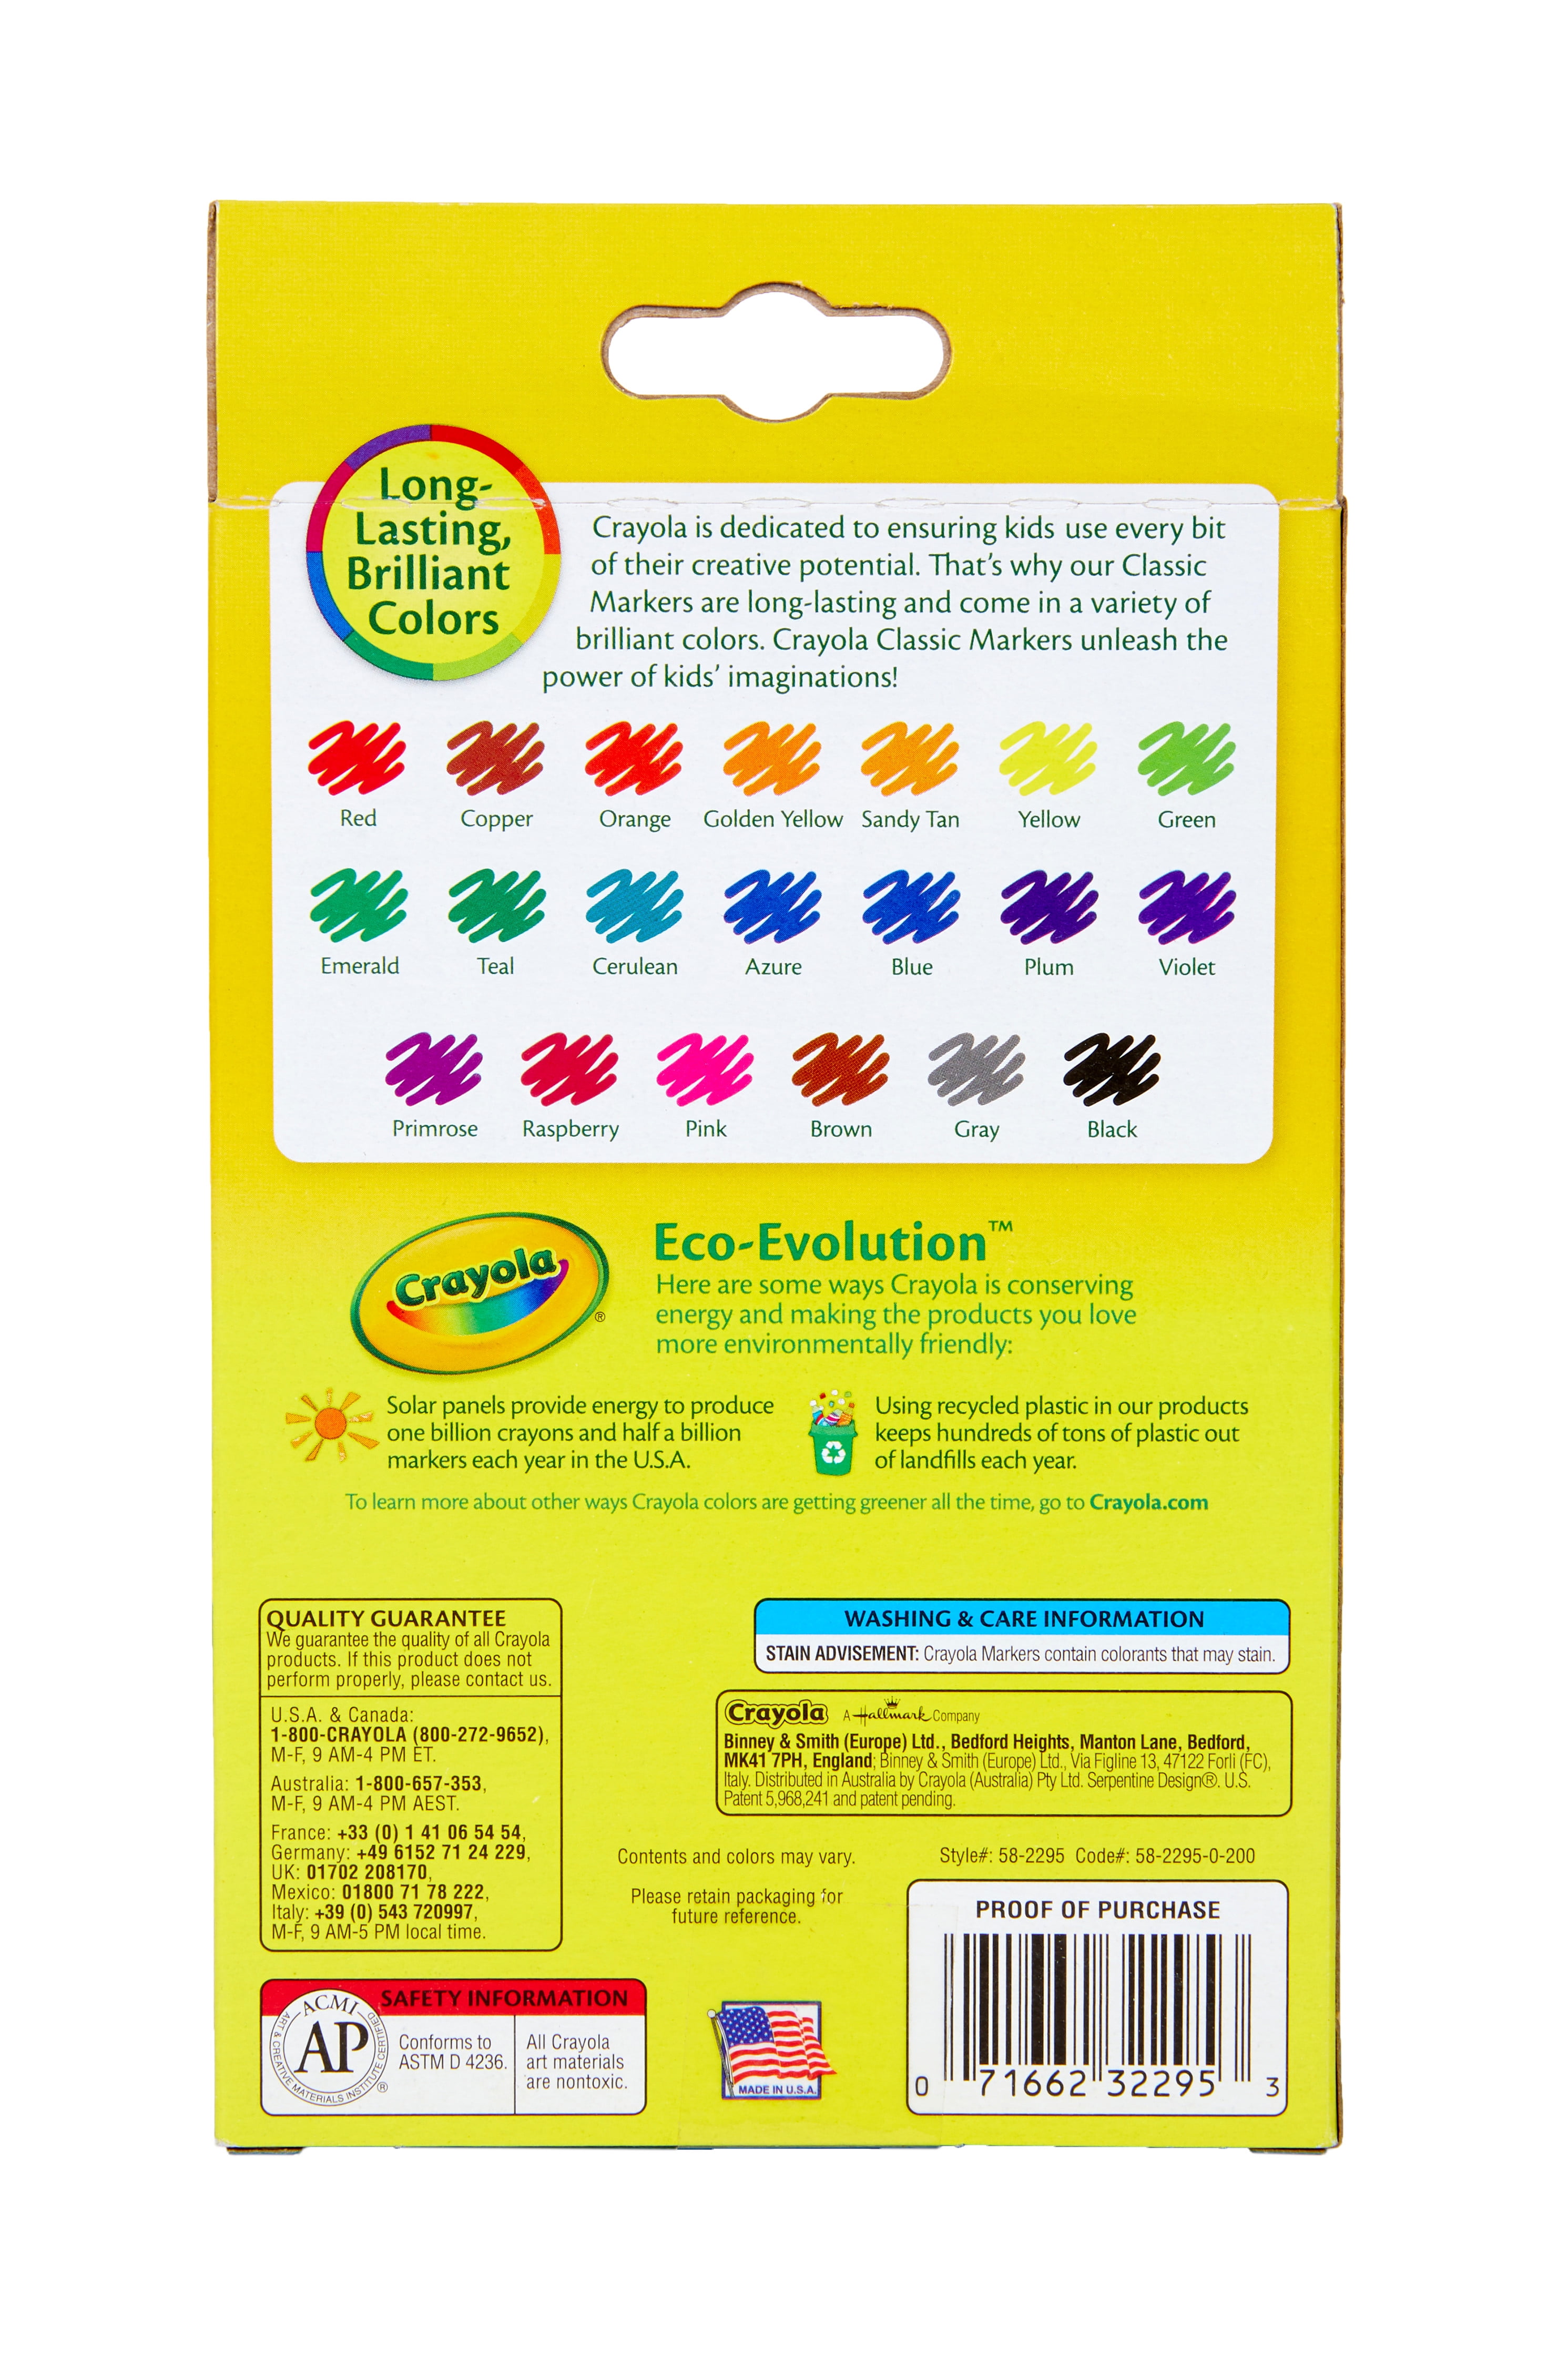 Fine Line Crayola Marker 8ct – USD Charlie's Store